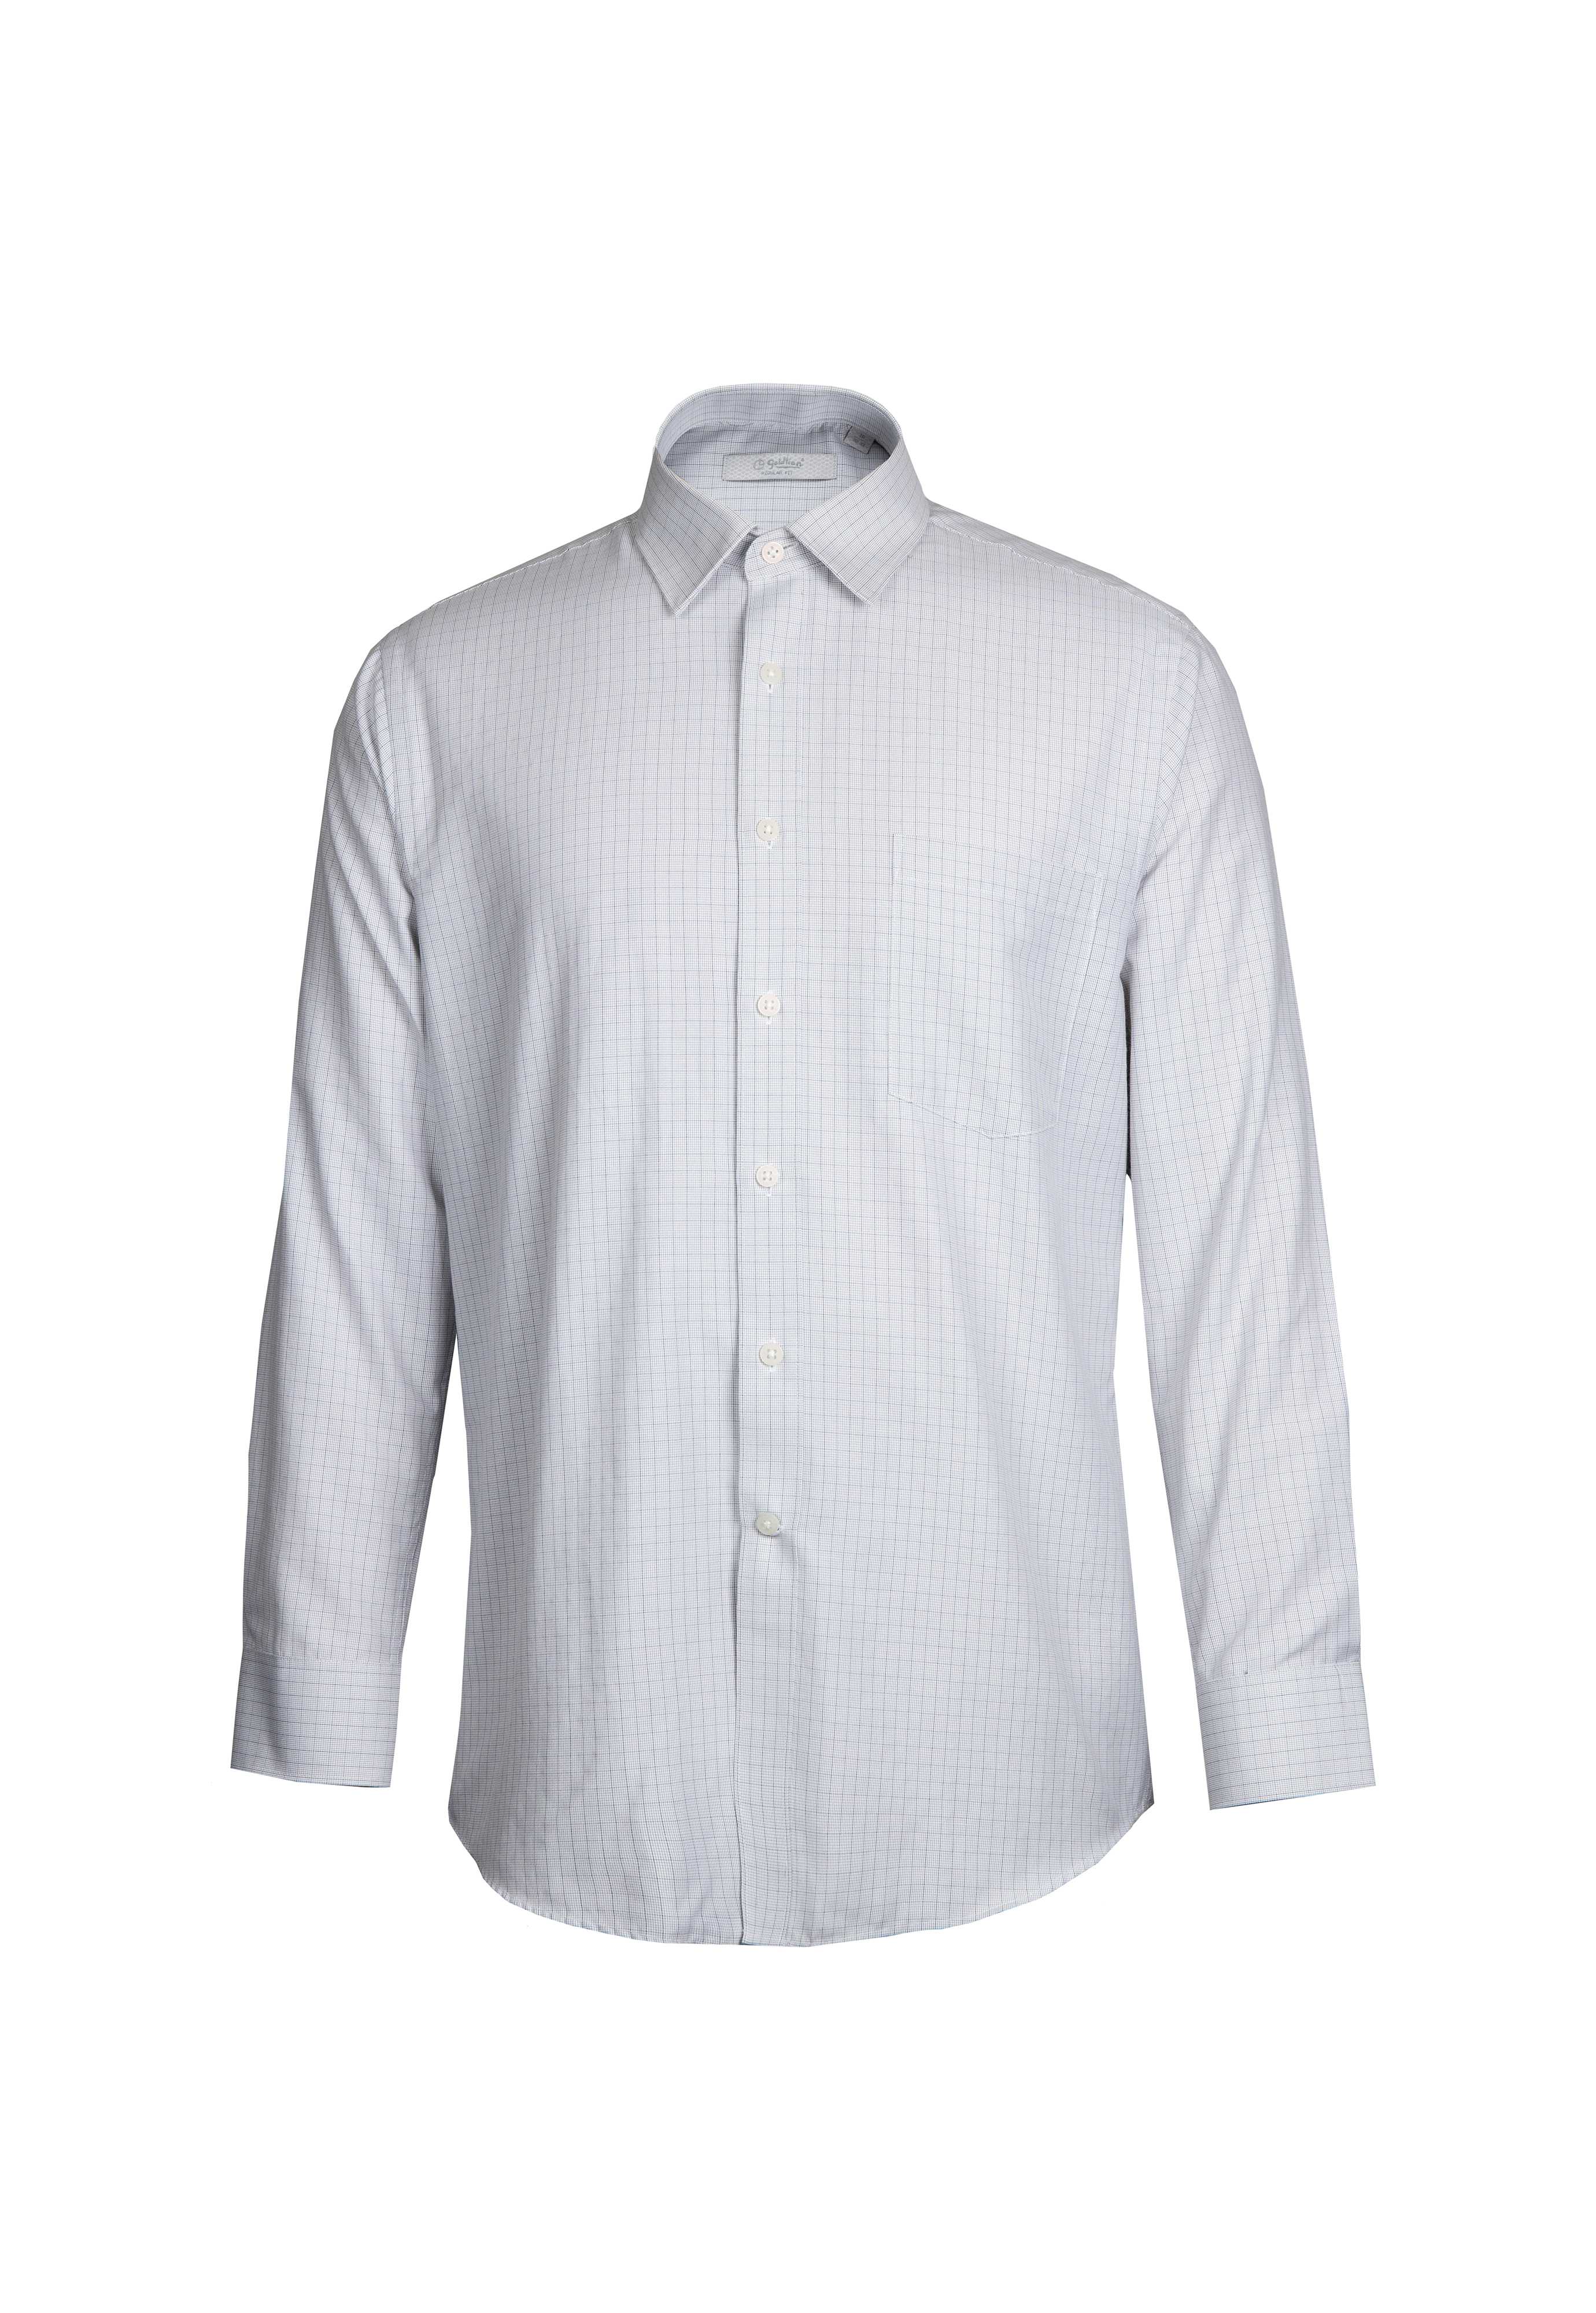 Goldlion Business Regular Fit Cotton Rich Long-Sleeved Shirt - Blue/Grey Checkered